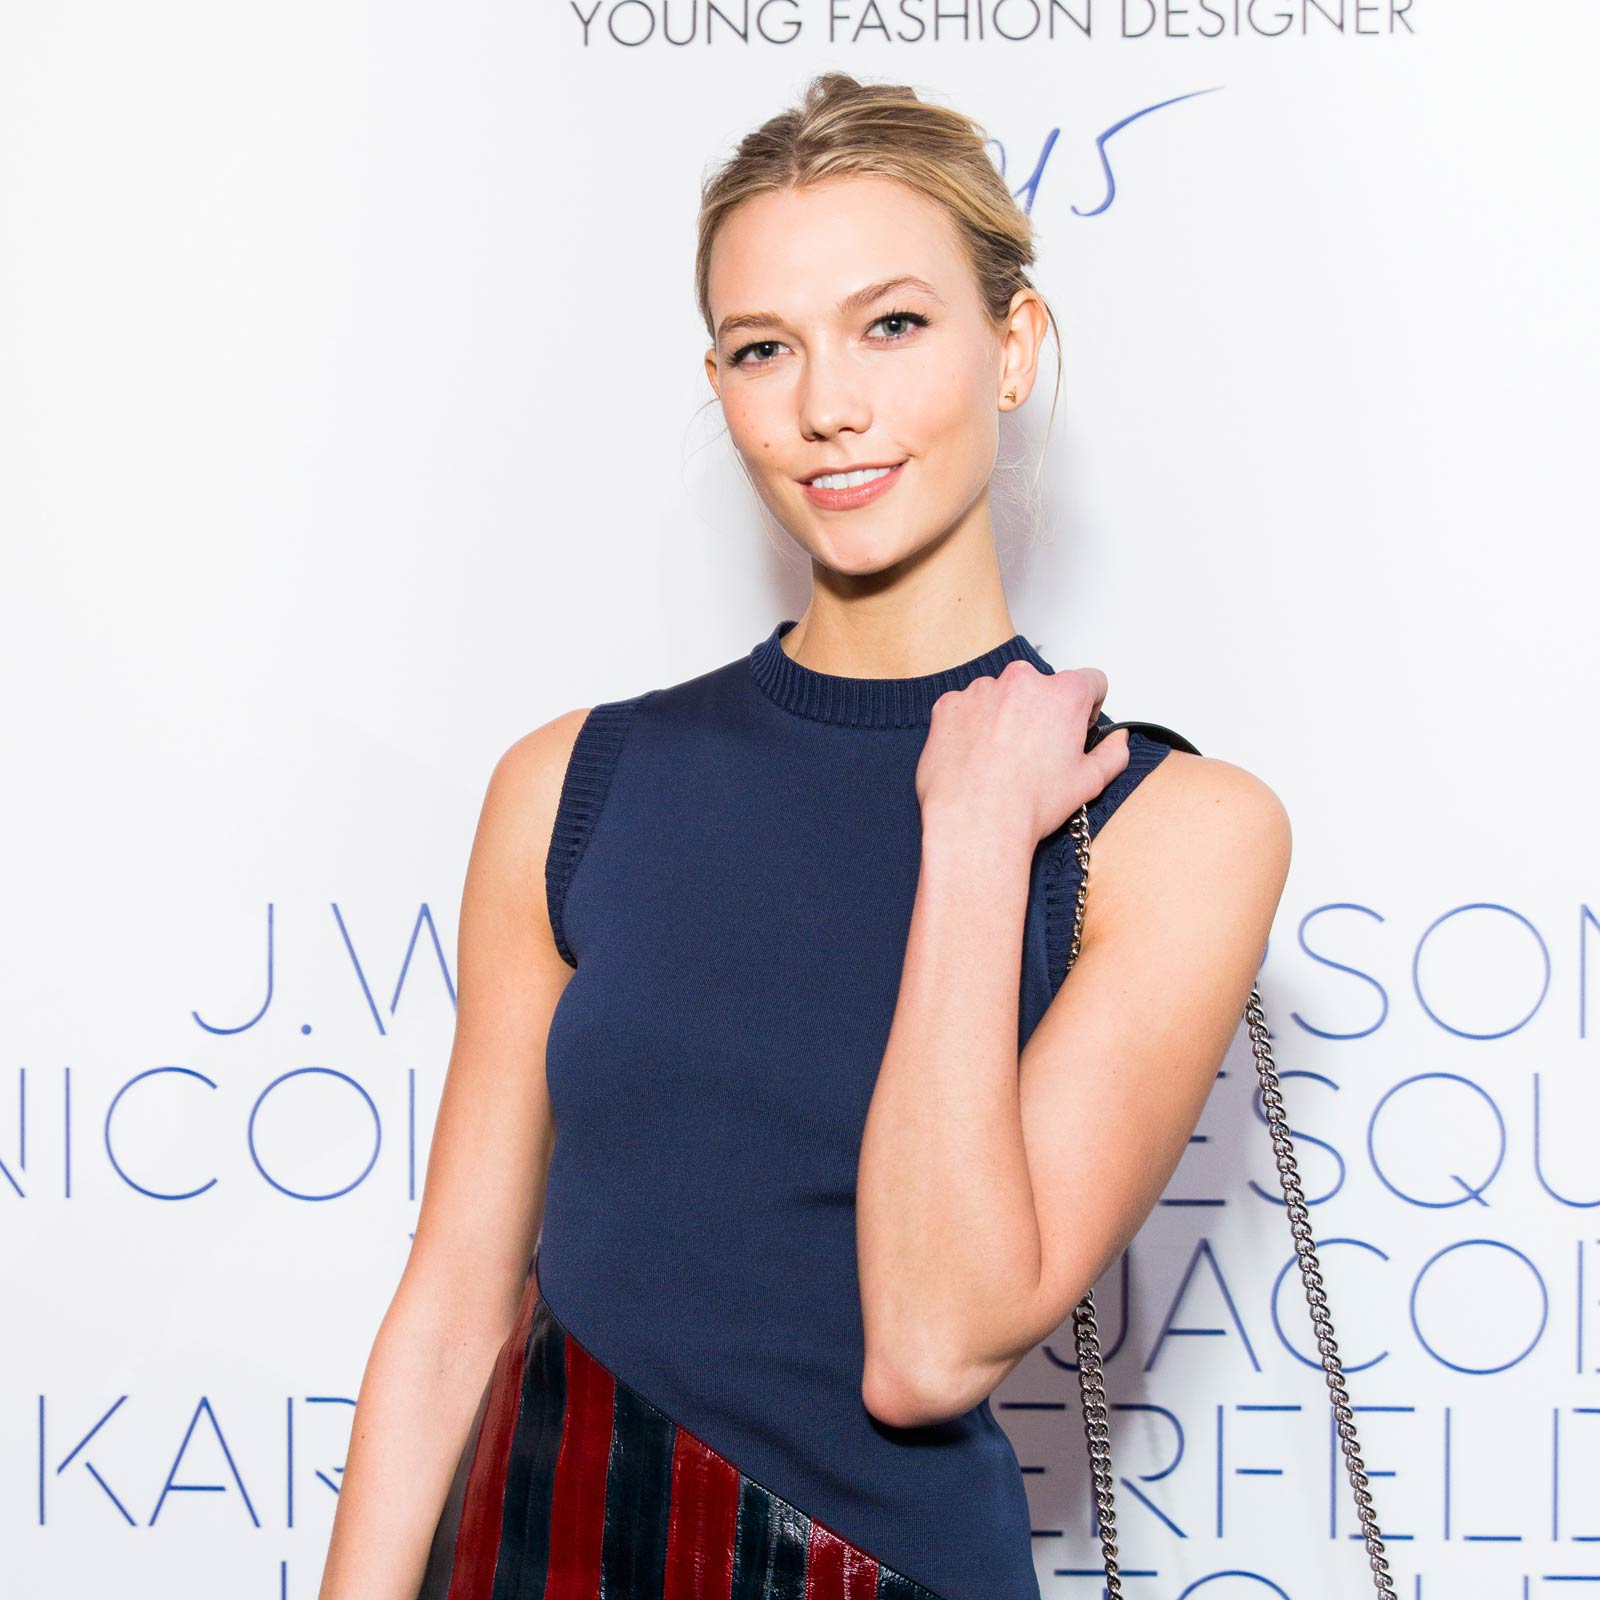 Karlie Kloss attends LVMH Prize Young Fashion Designer